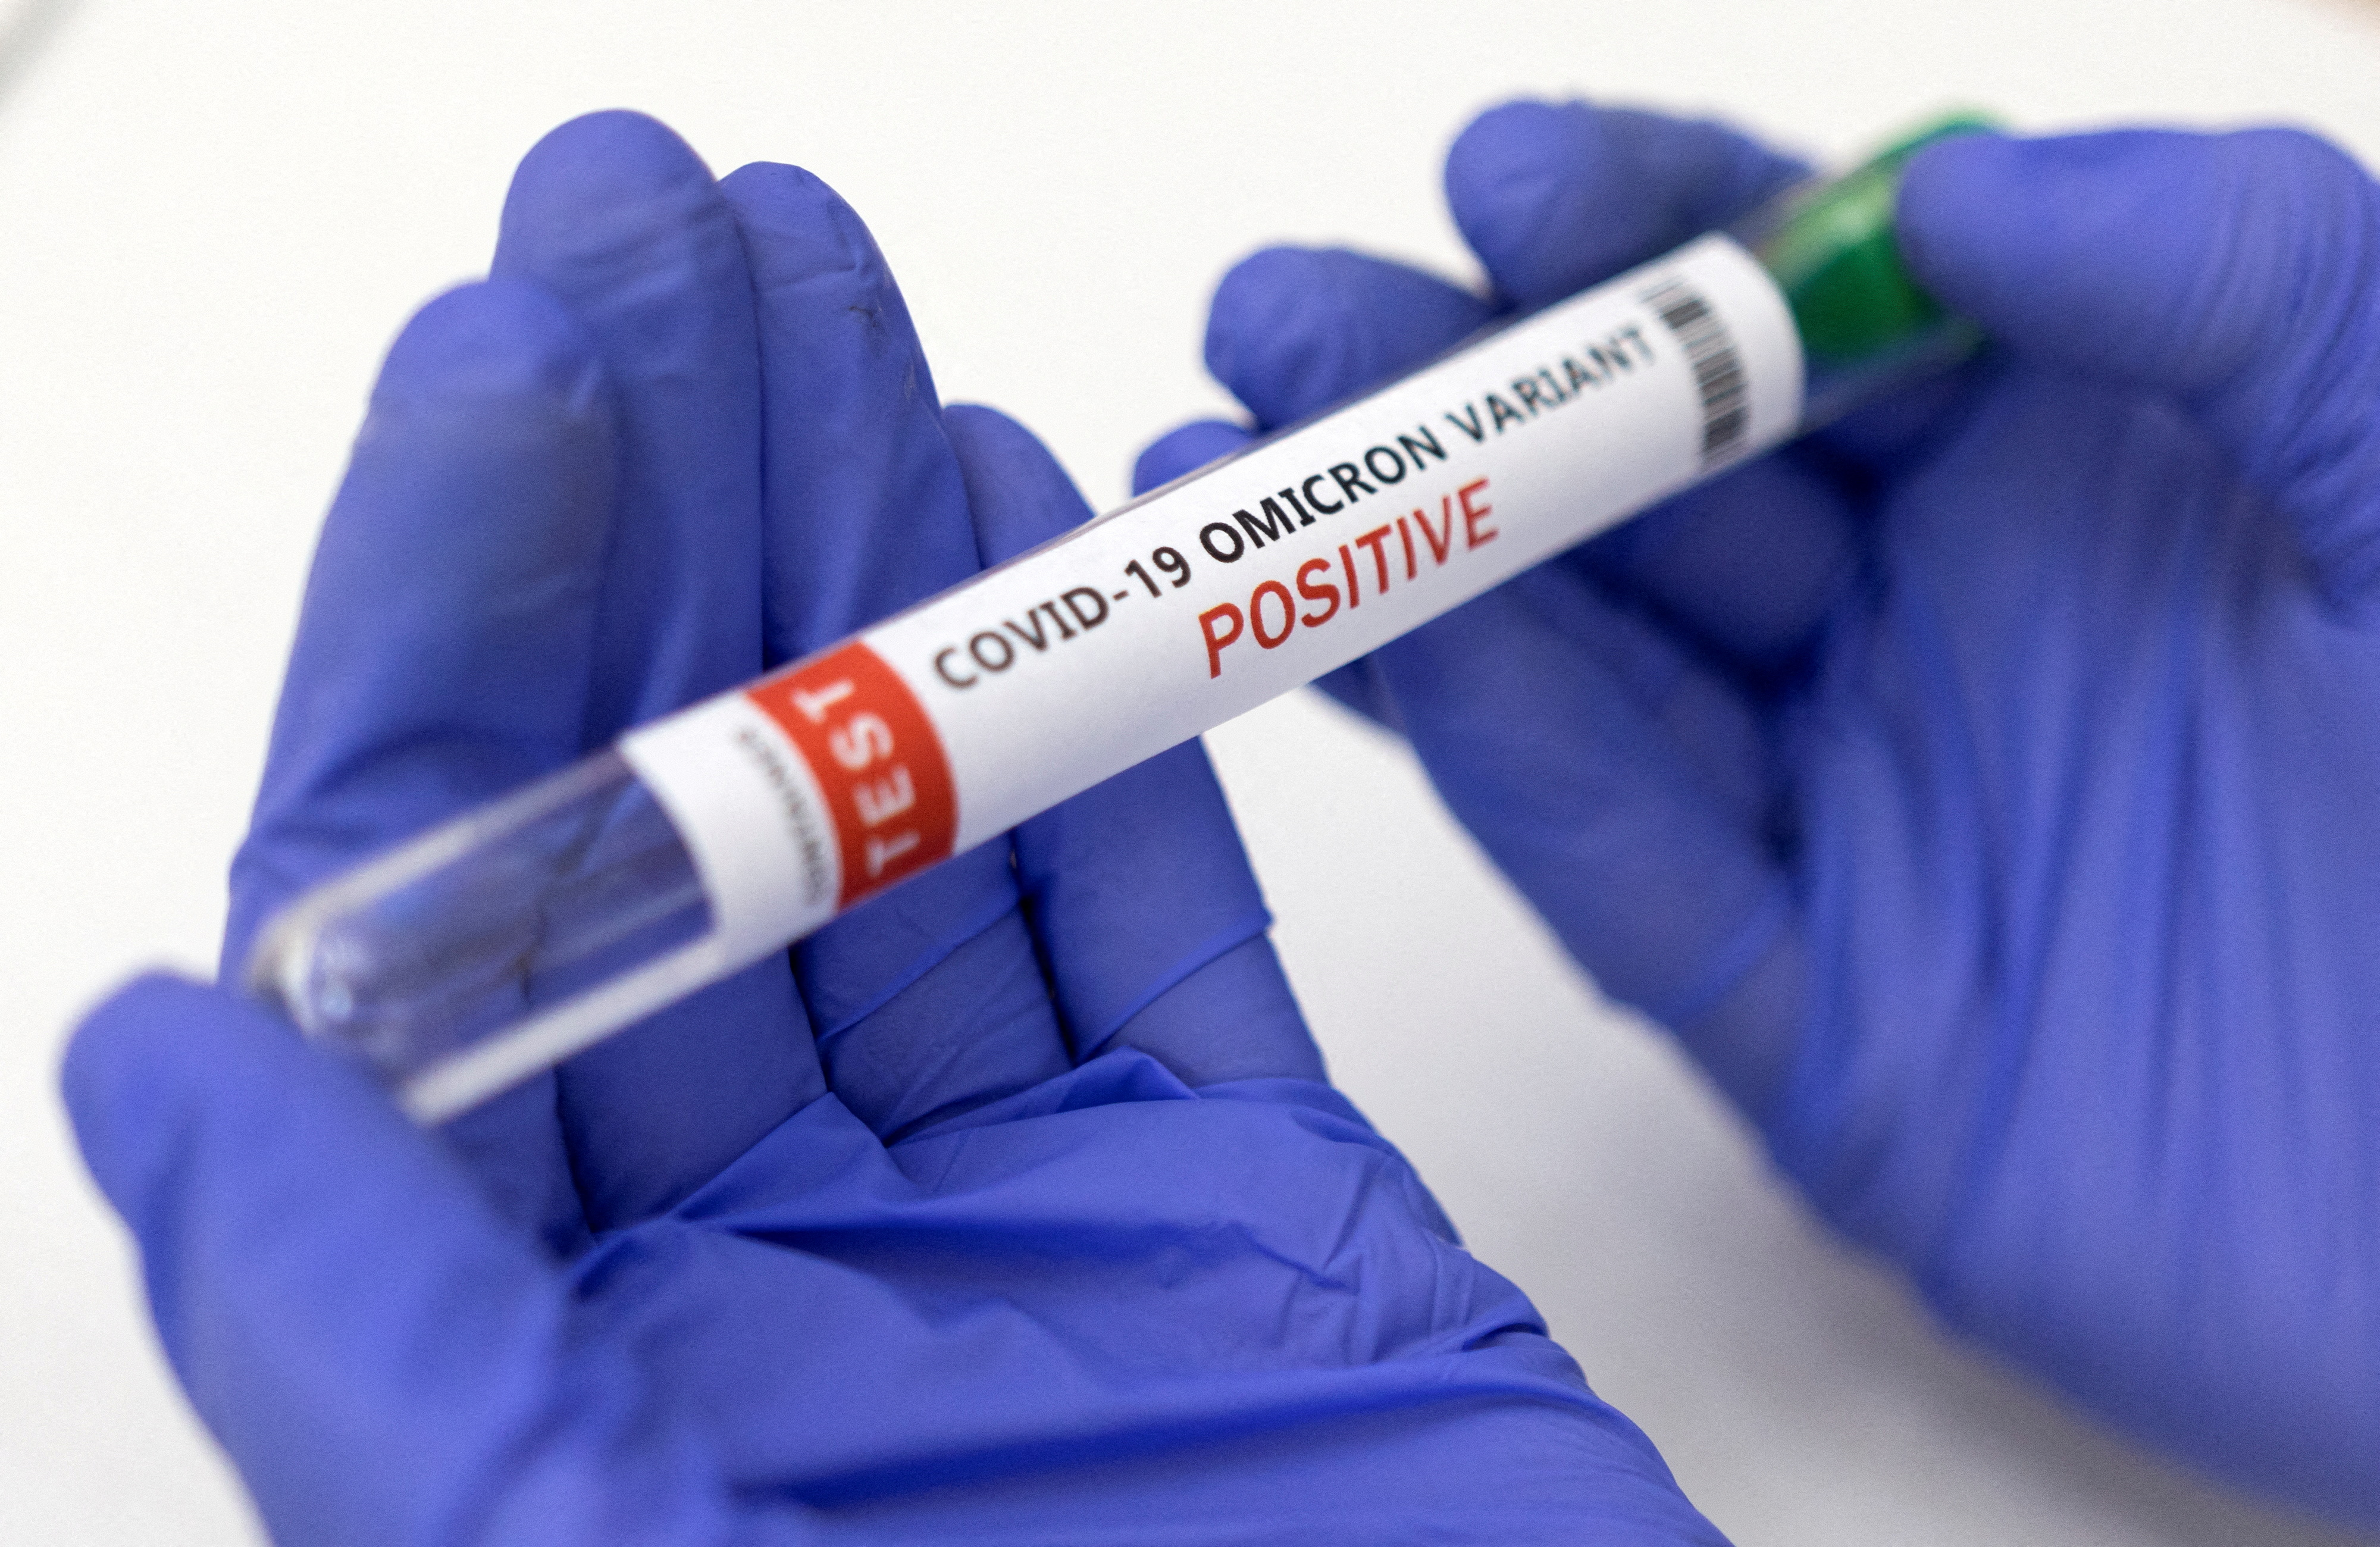 Illustration shows test tube labelled "COVID-19 Omicron variant test positive\